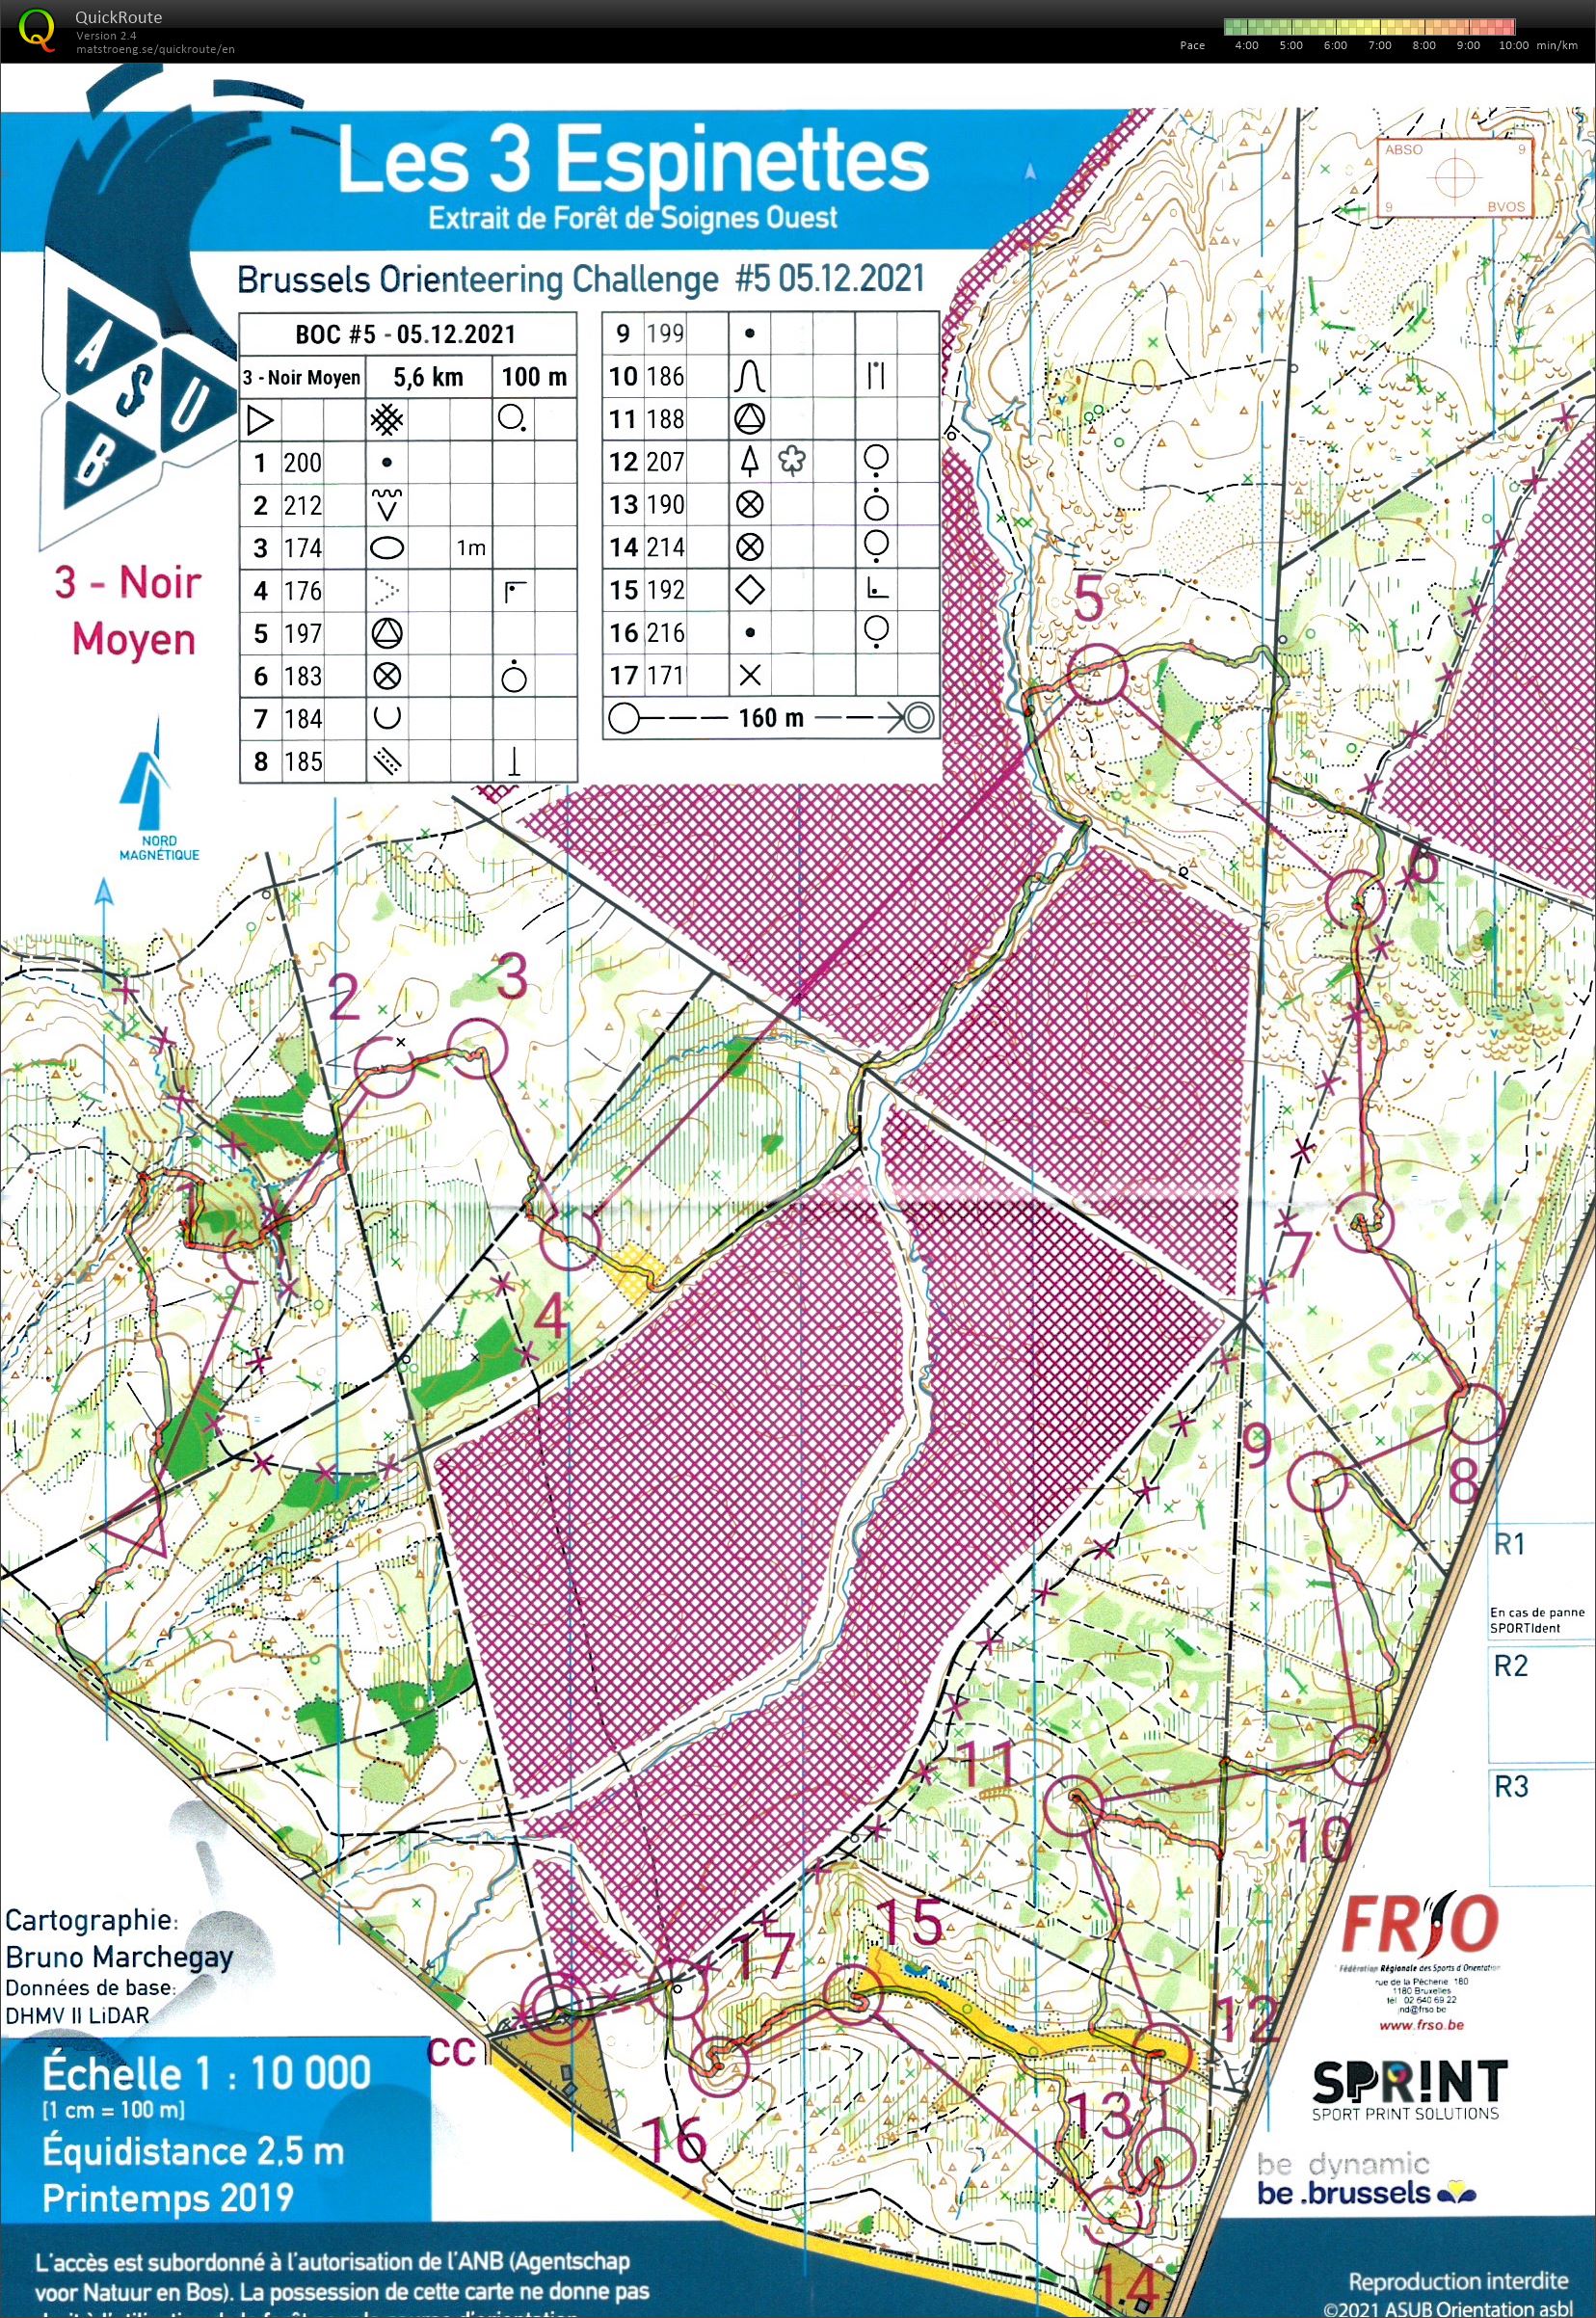 Brussels Orienteering Challenge - Sint-Genesius-Rode (05.12.2021)